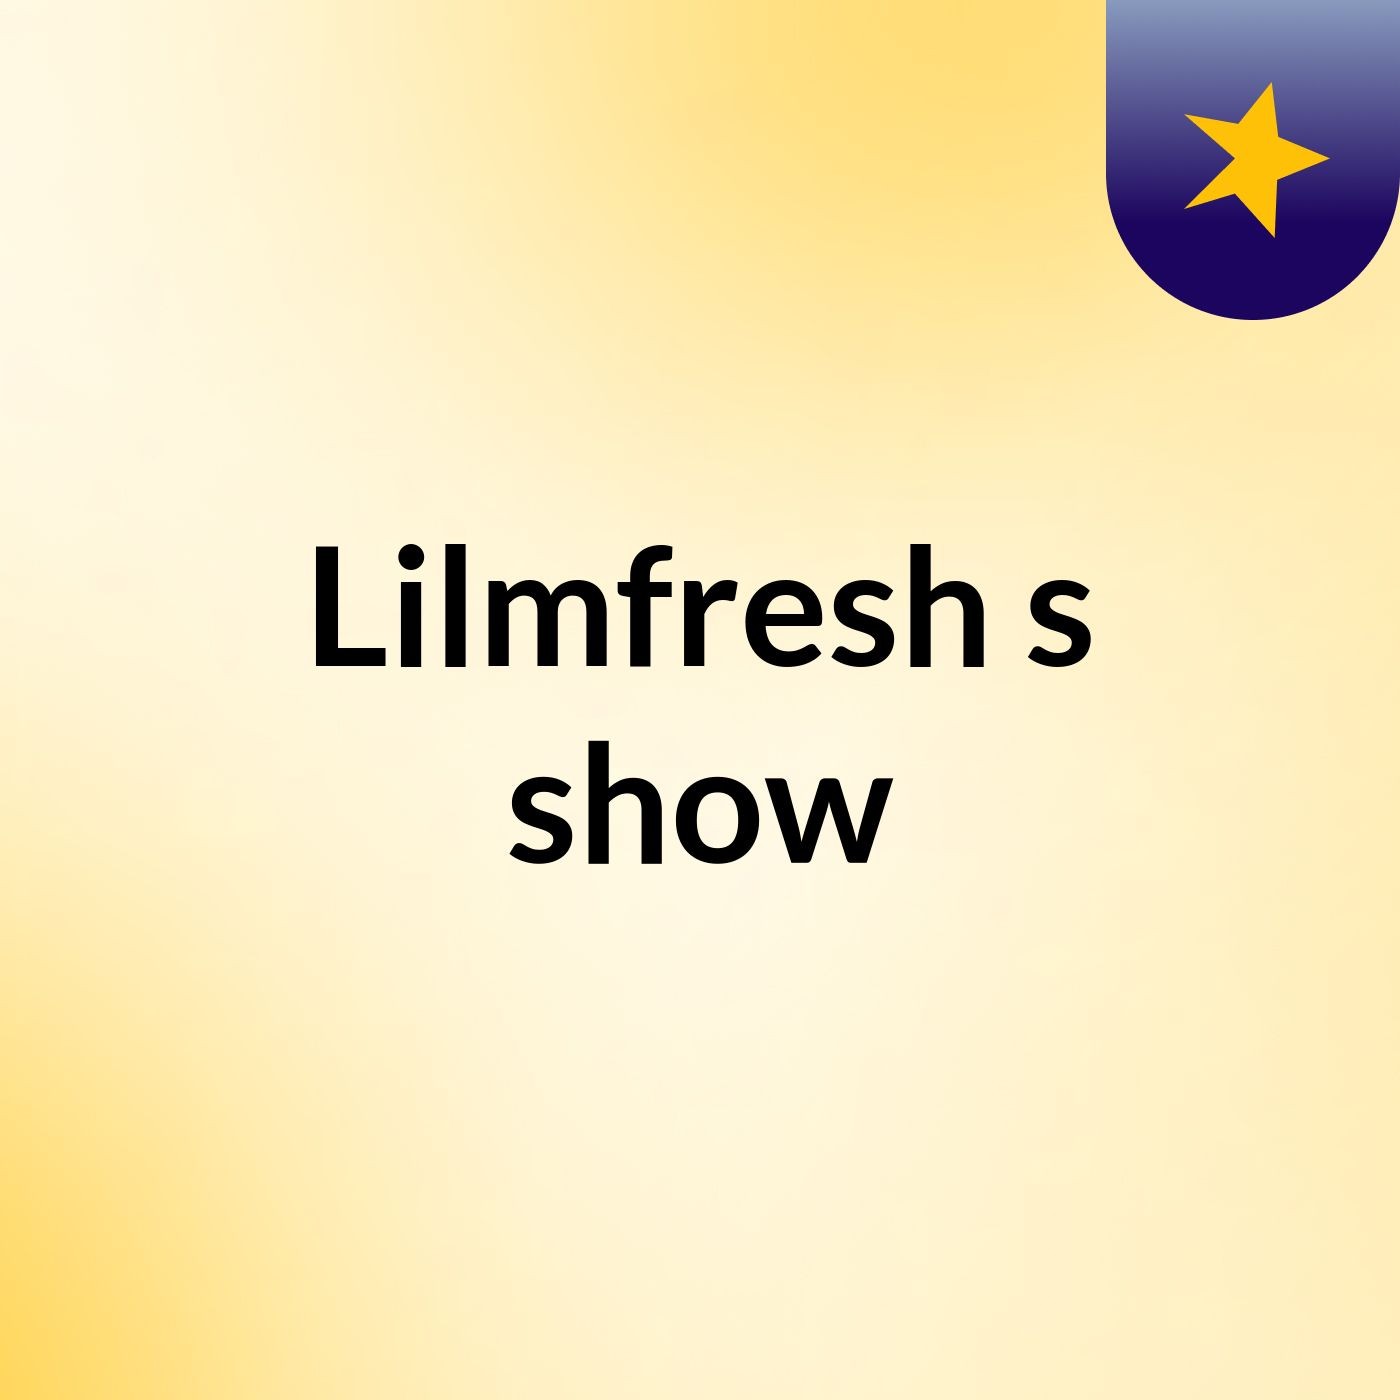 Lilmfresh's show